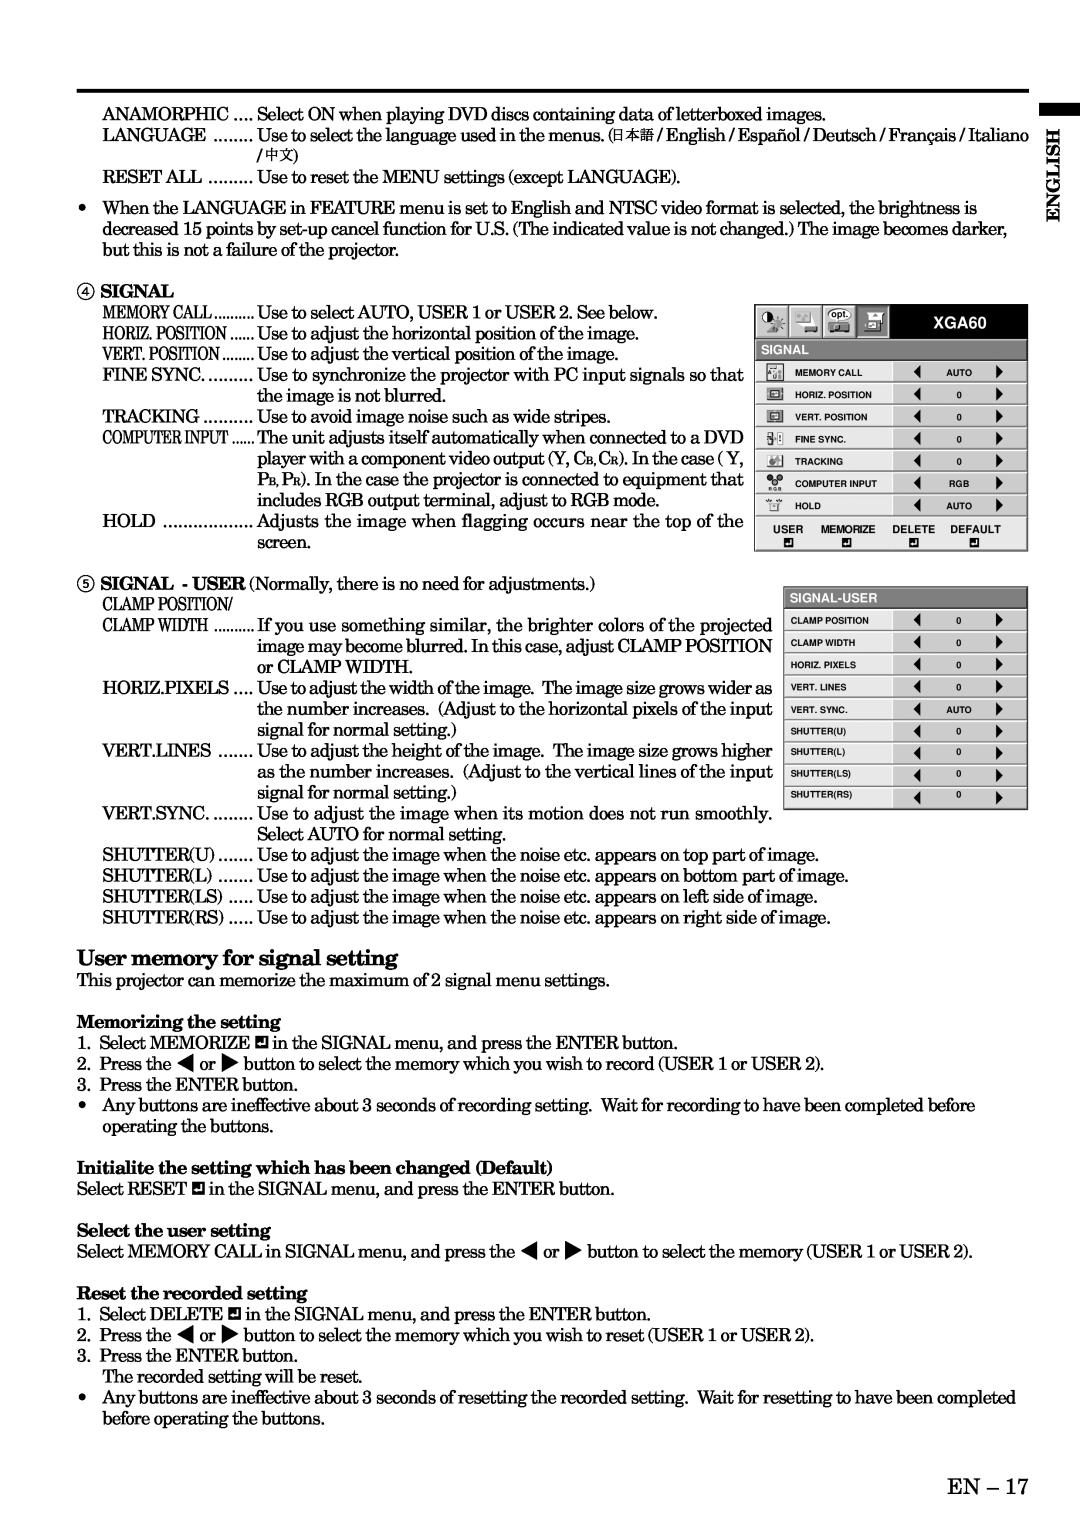 Mitsubishi Electronics X500U user manual User memory for signal setting, English, Signal, Memorizing the setting 